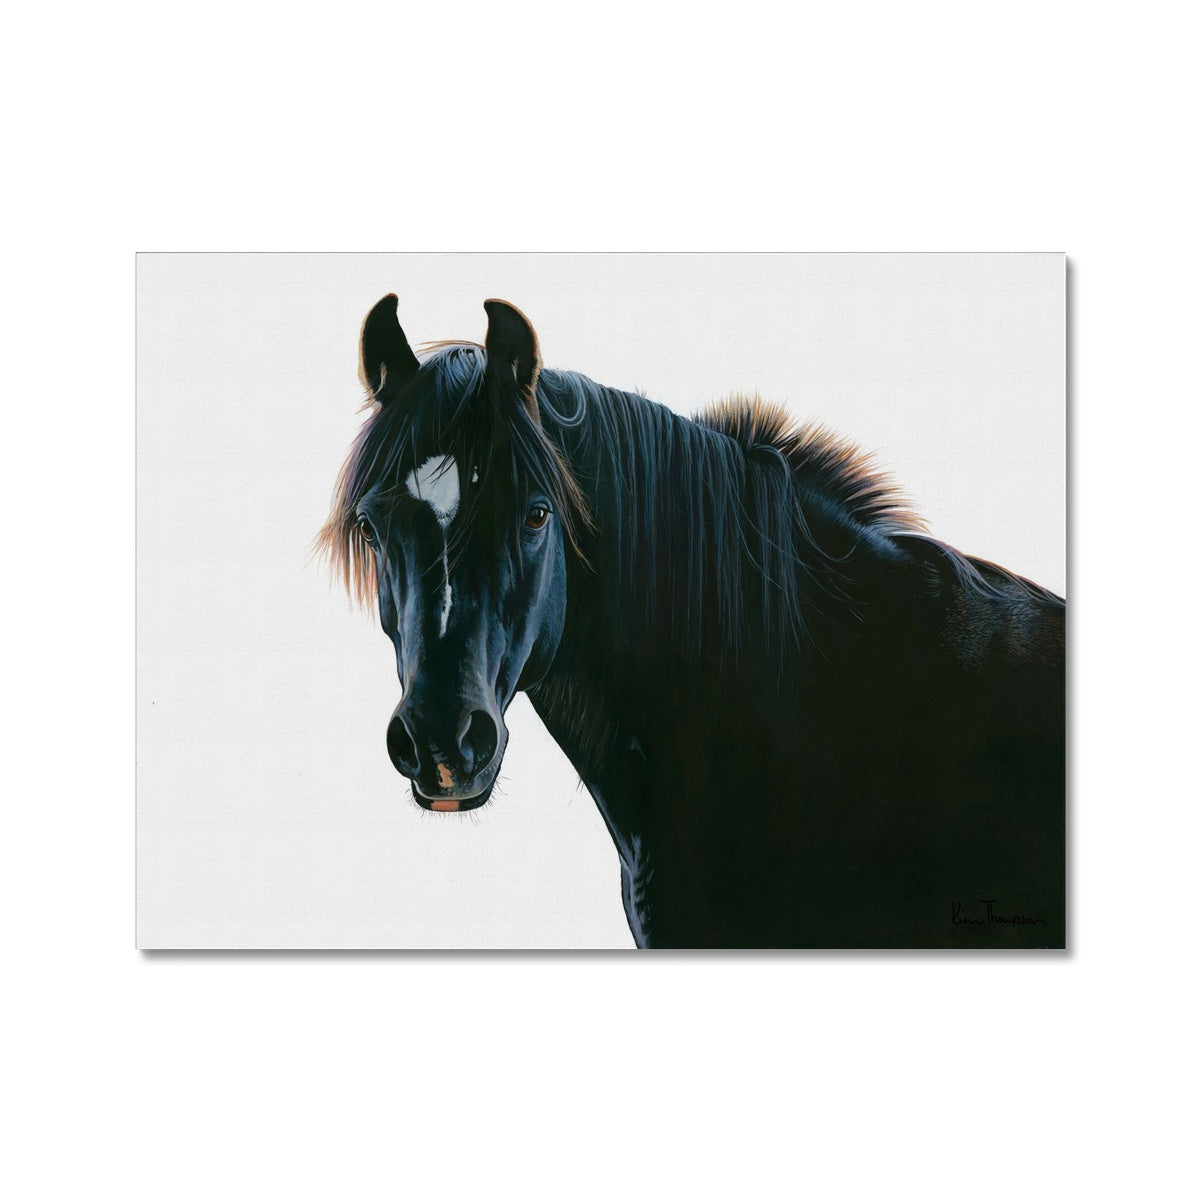 The Black Horse Canvas